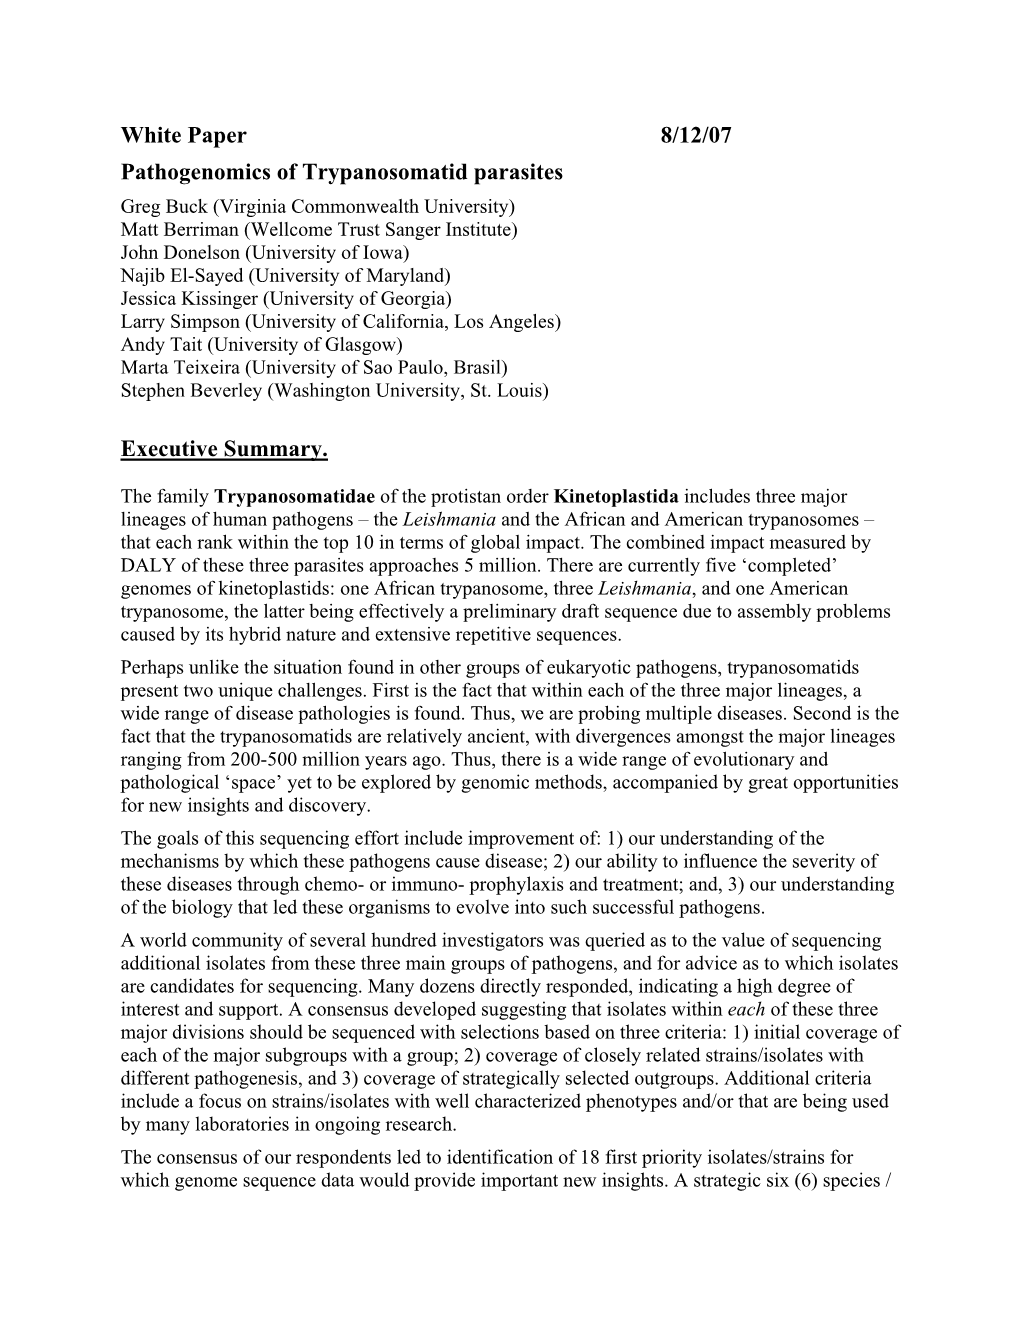 Pathogenomics of Trypanosomatid Parasites